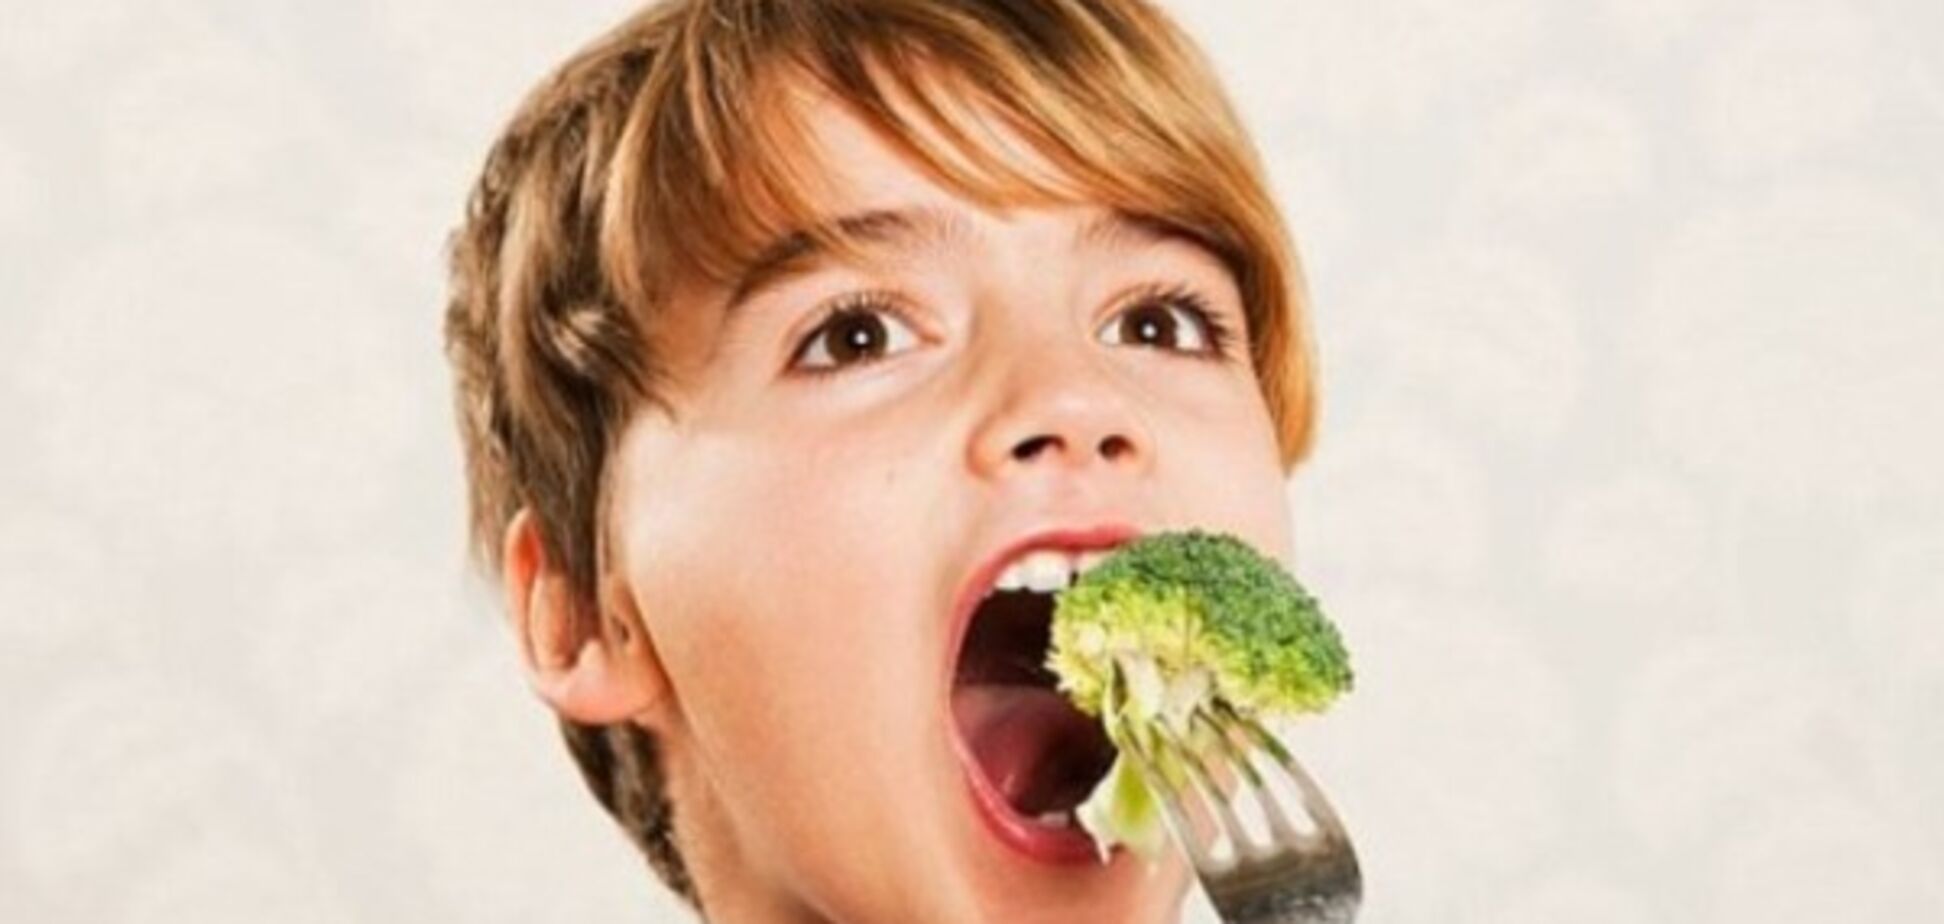 Мальчик ест брокколи